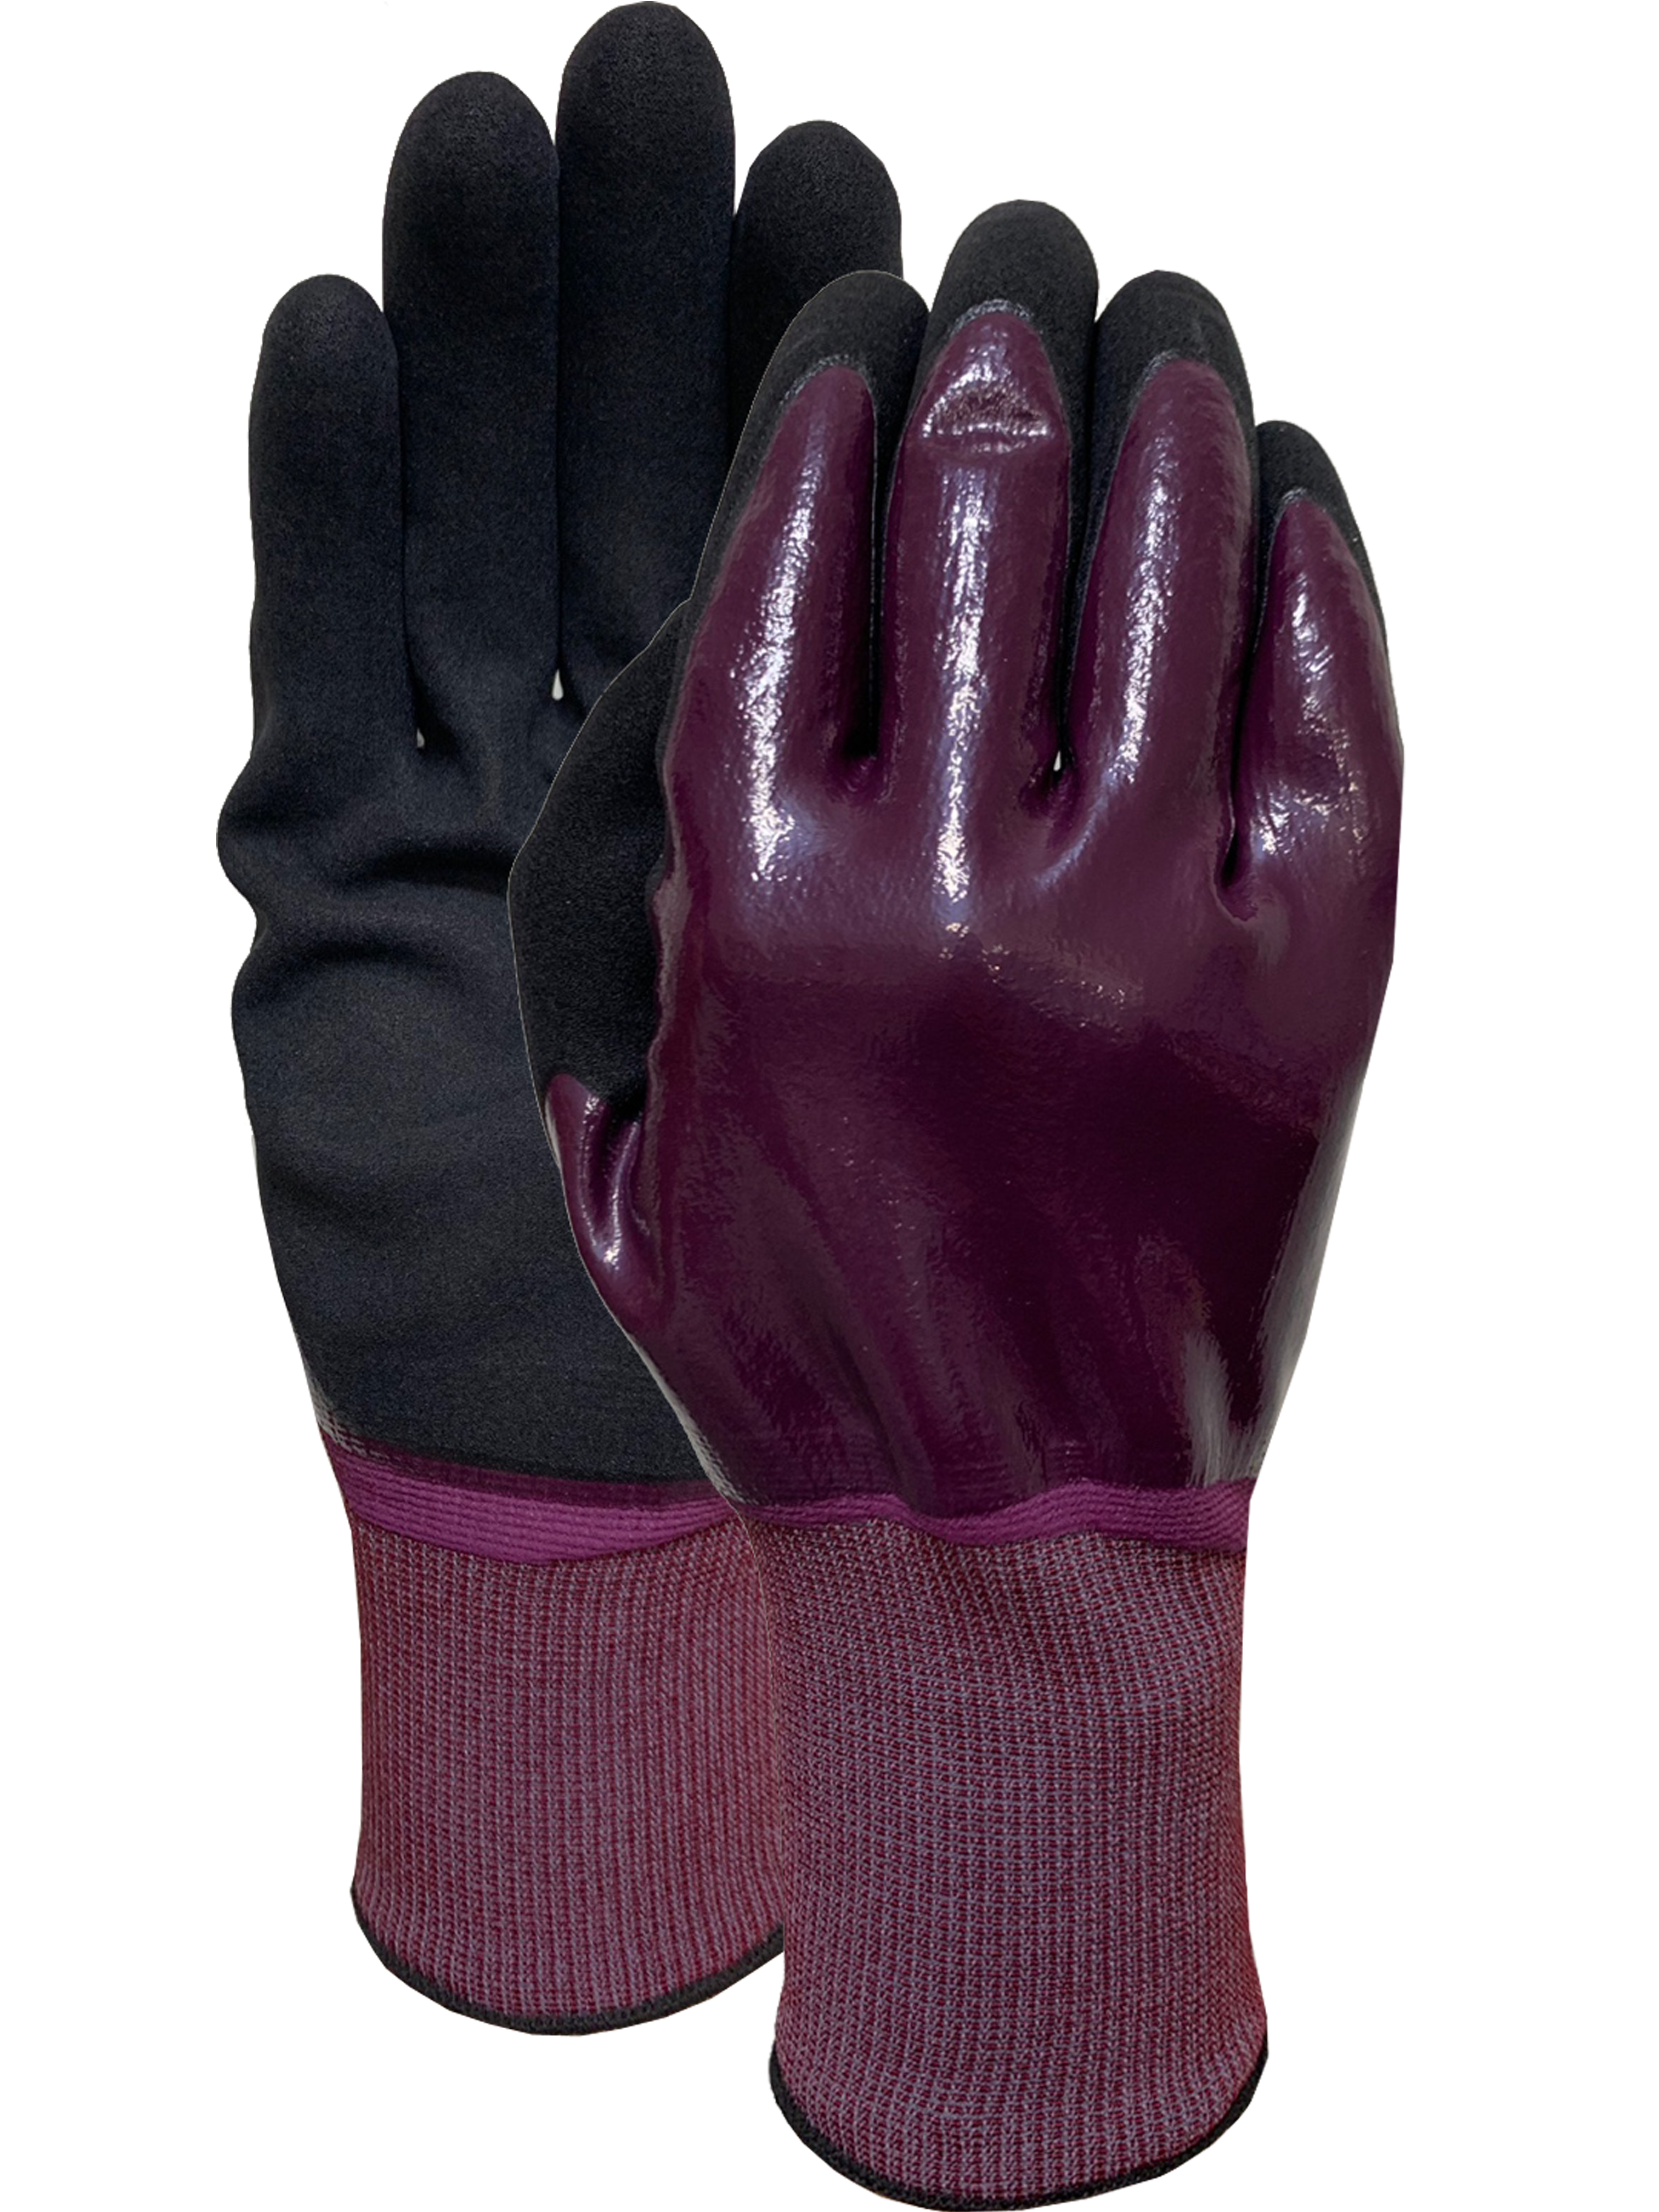 Nylon with Purple nitrile full dip / black nitrile micro finish palm coating glove